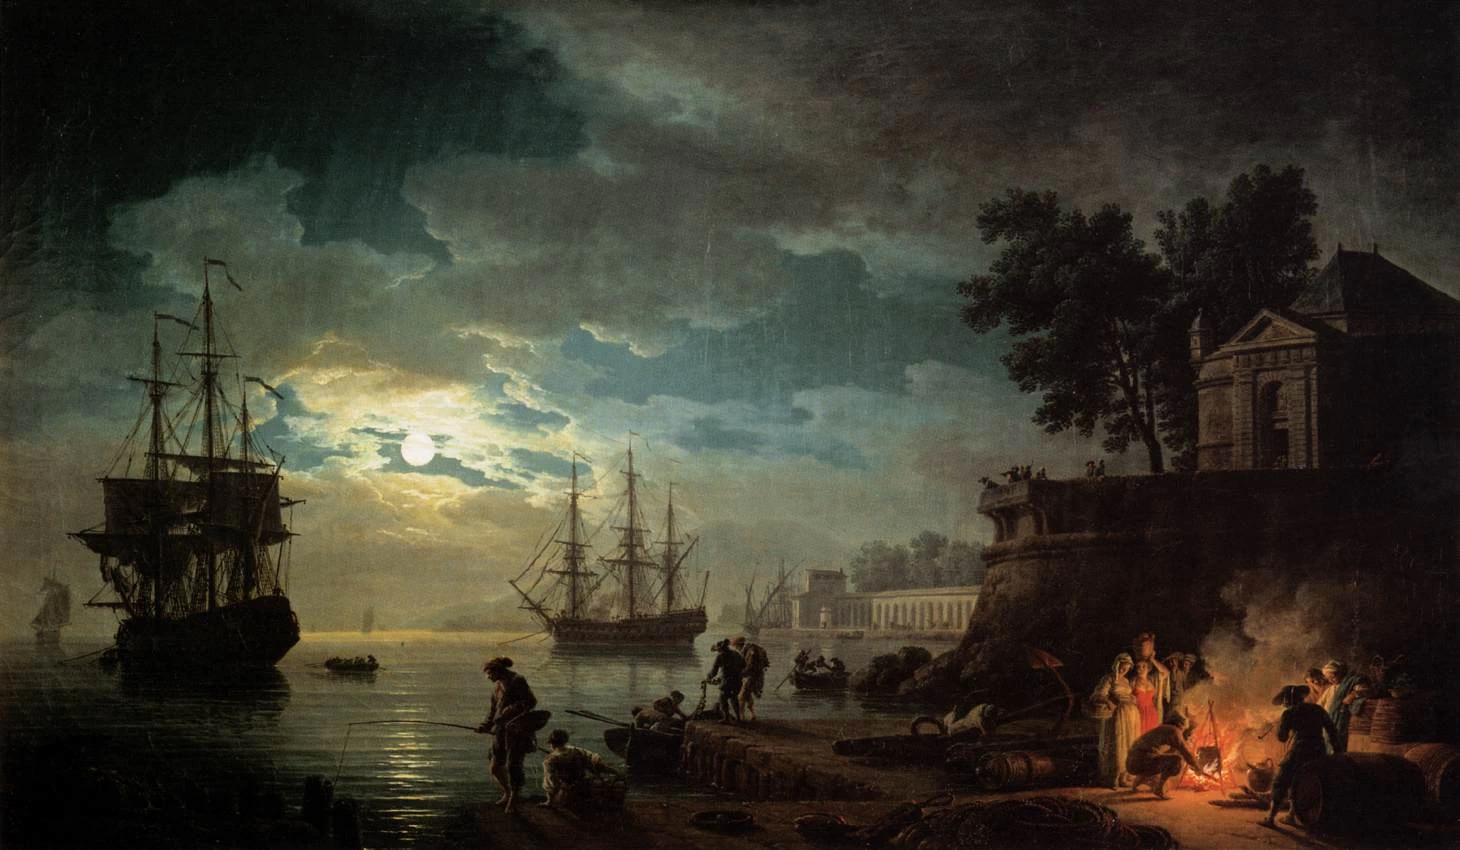  169-Scena di un porto al chiaro di luna-Musée du Louvre, Paris 